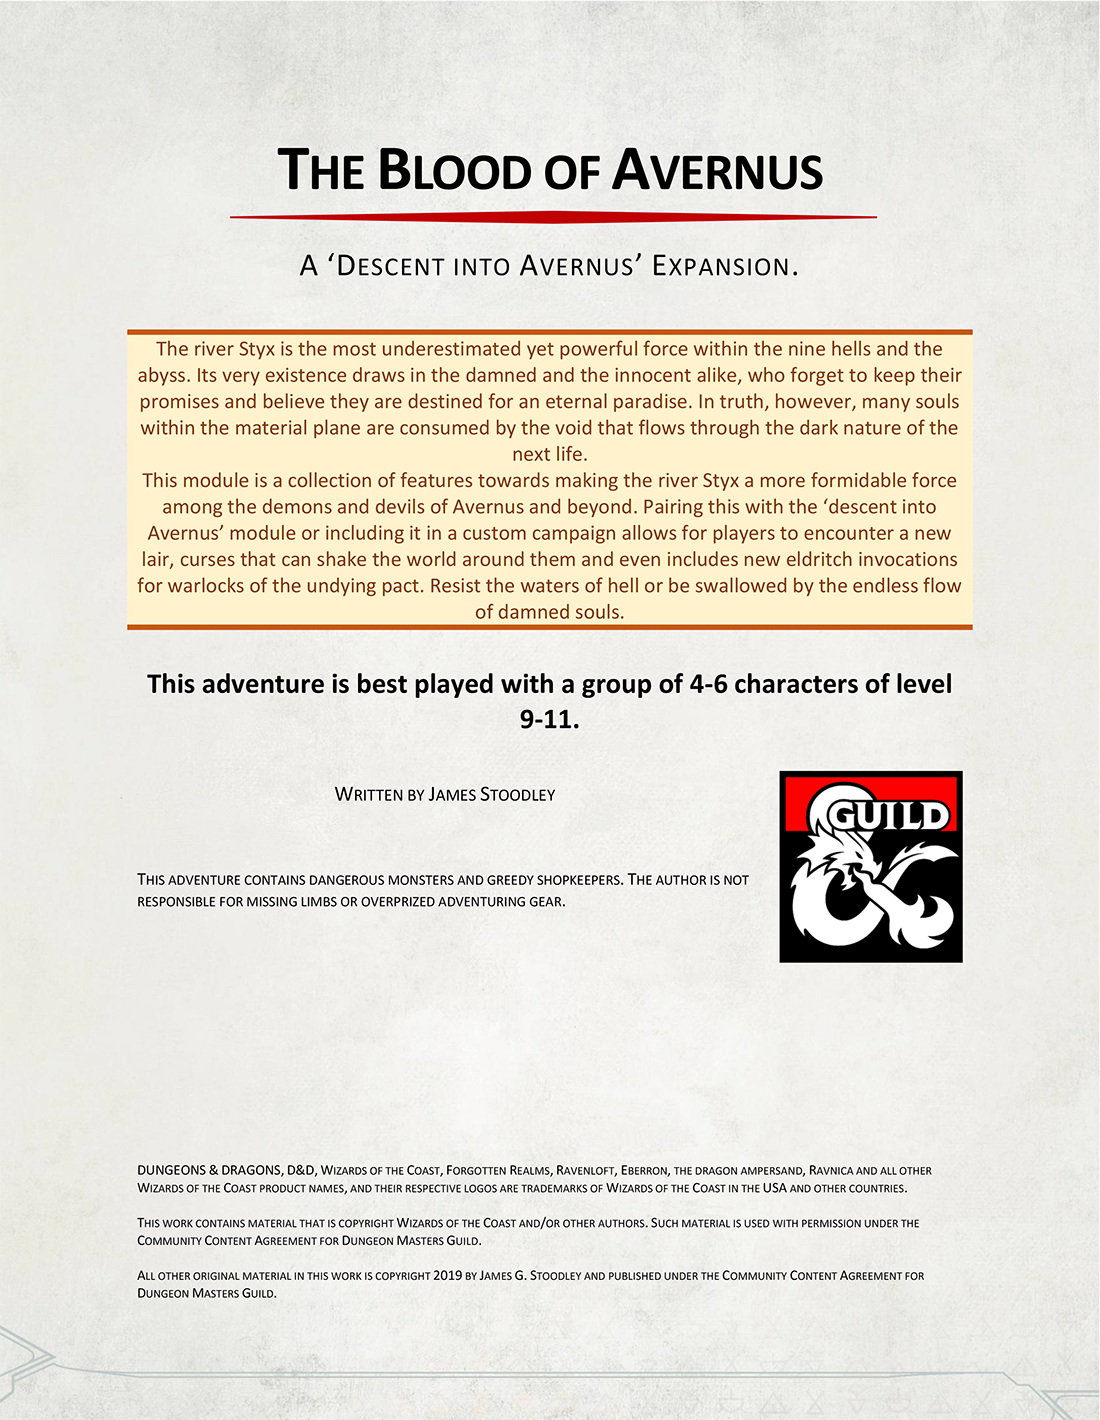 Blood of Avernus: An Expansion of Avernus' River Styx